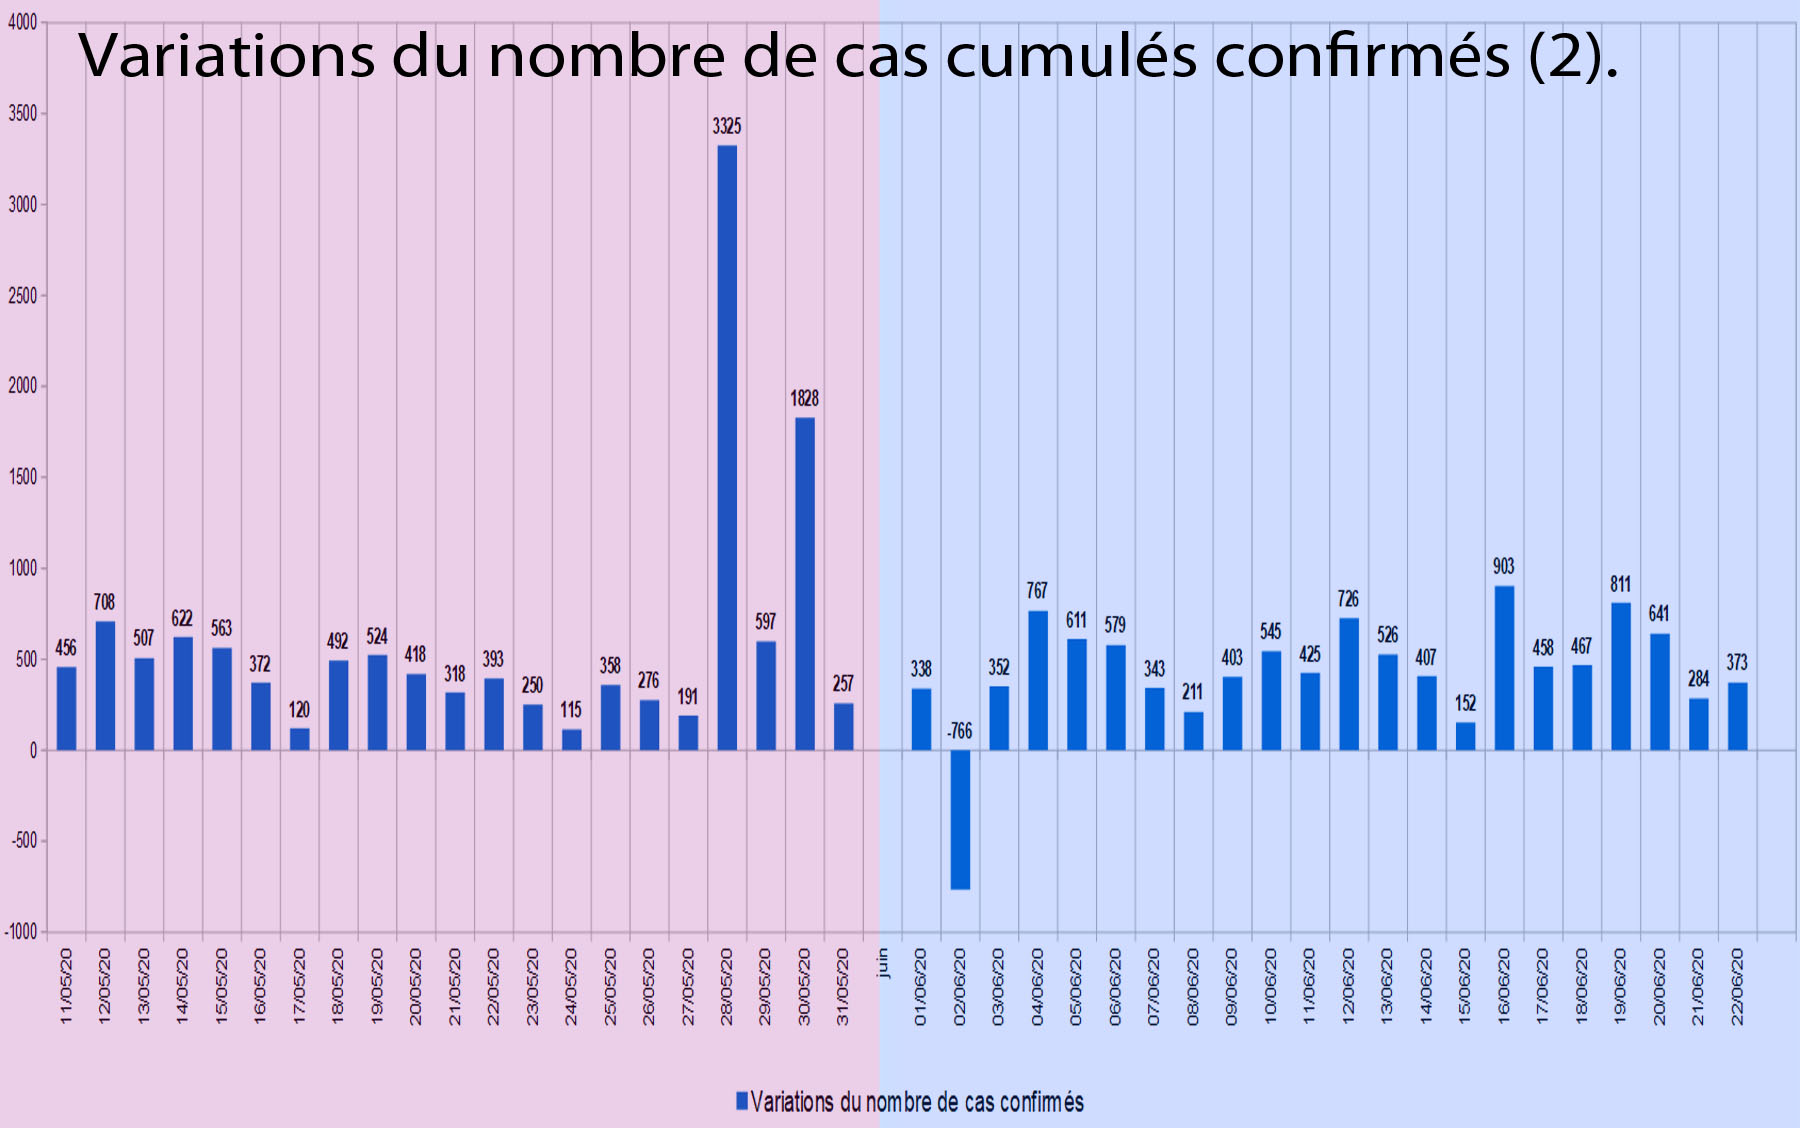 graphique2_2 Variations du nombre de cas cumulés confirmés (2).jpg